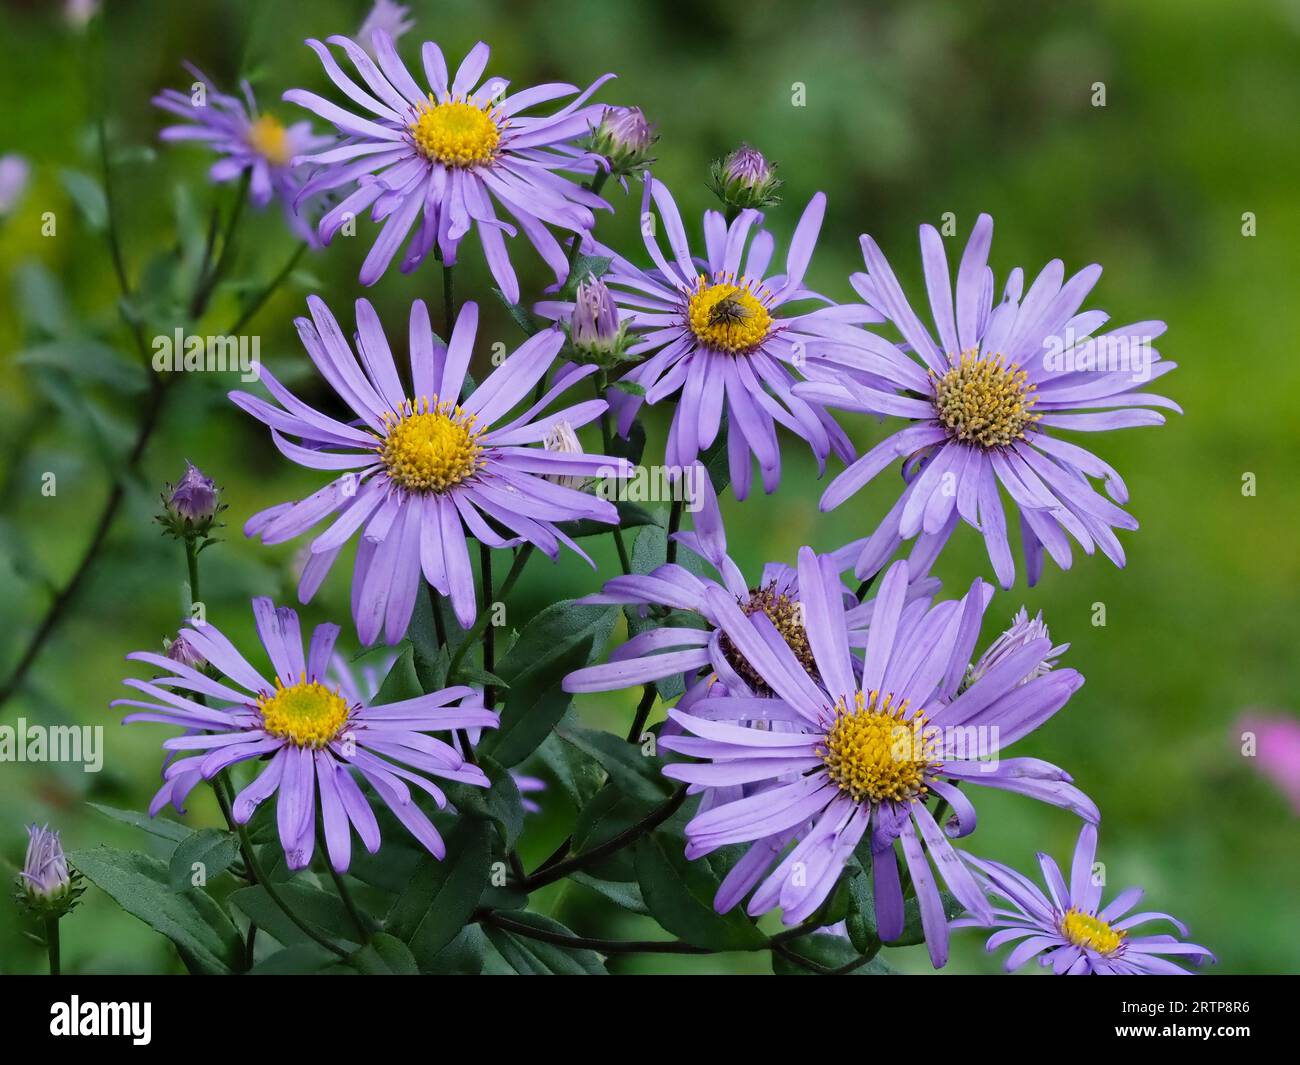 Blue flowers of the hardy perennial ornamental daisy, Aster x frikartii 'Jungfrau' Stock Photo